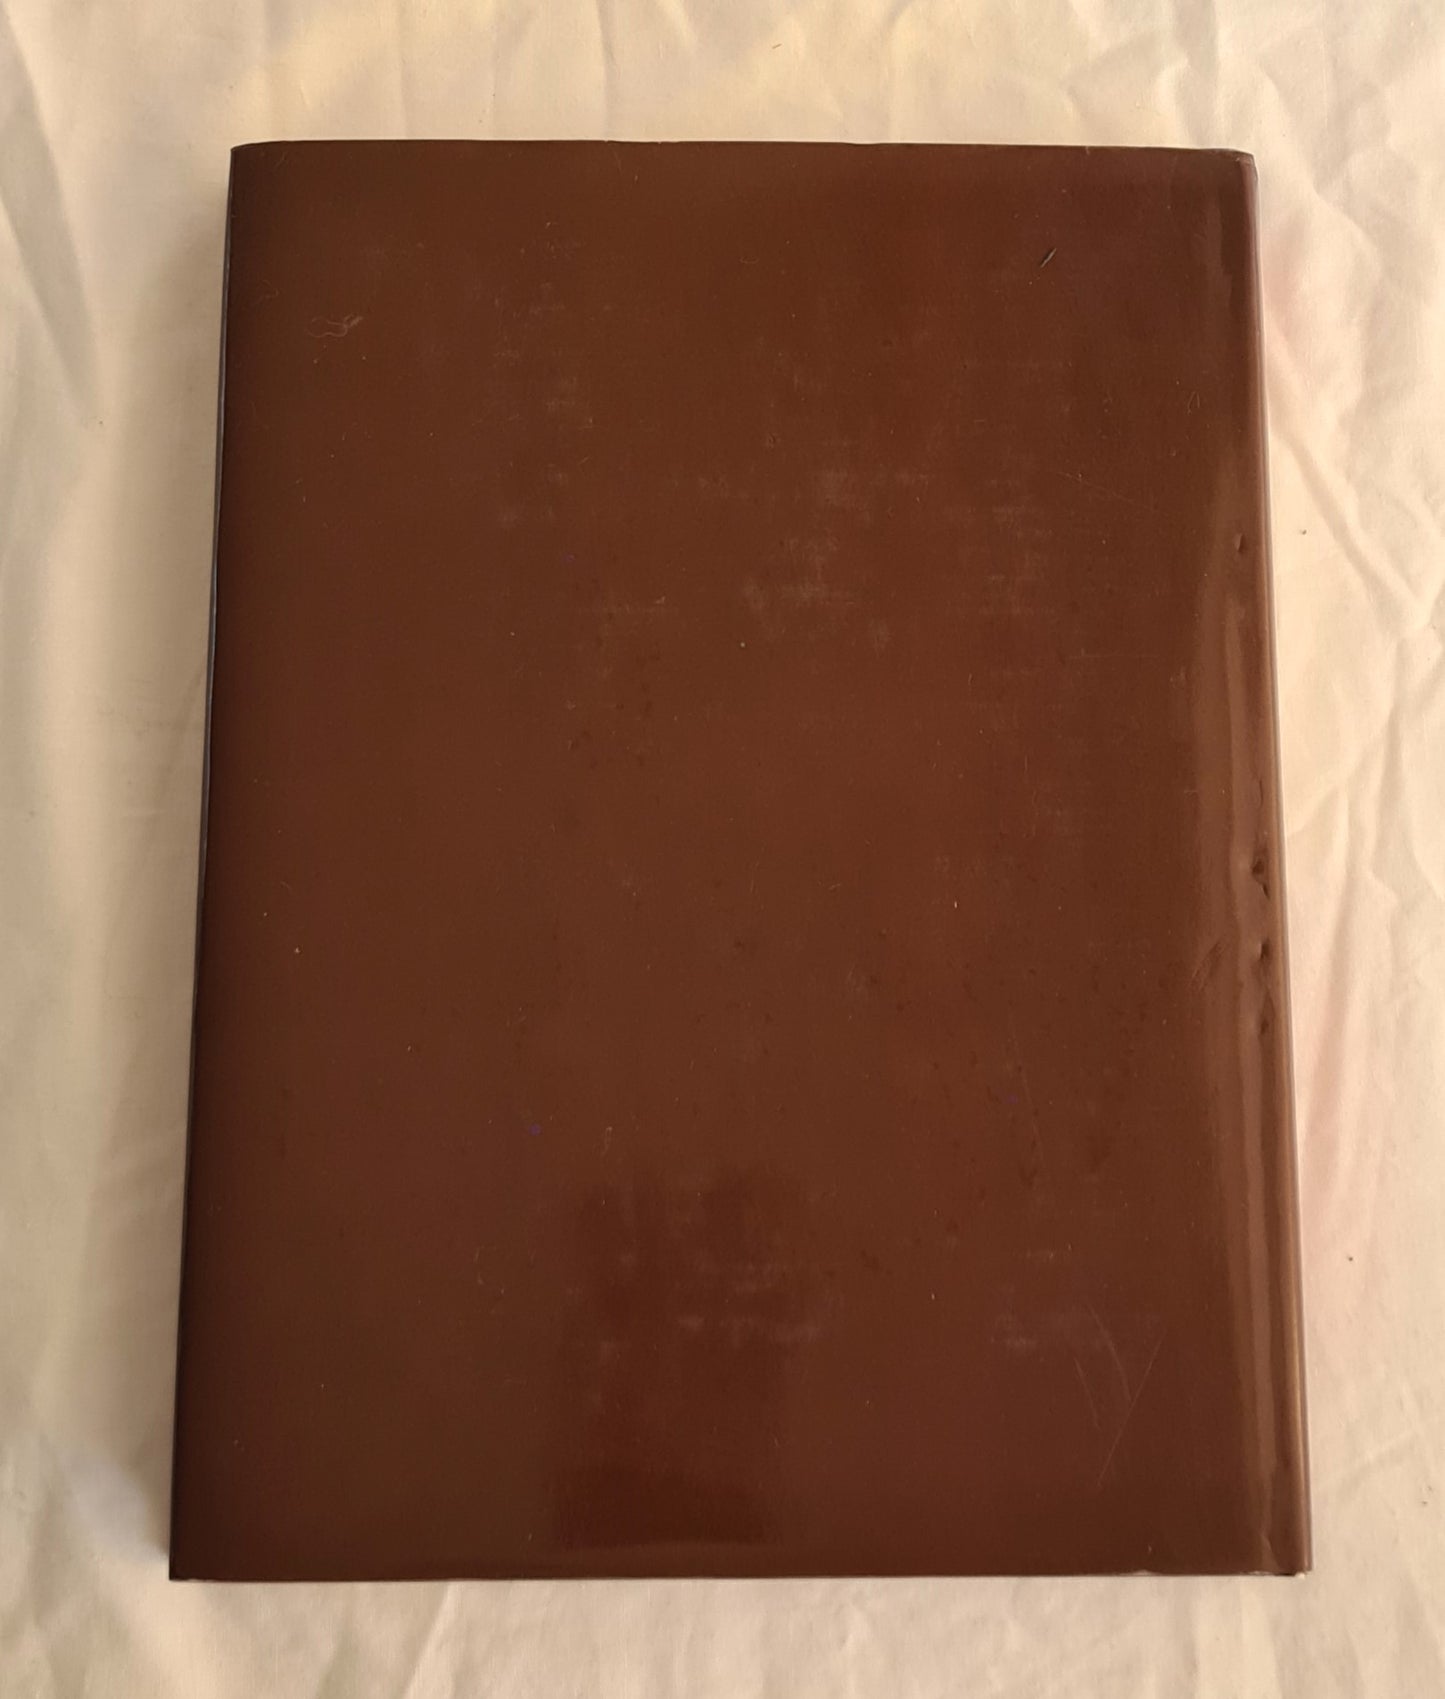 The Book of the Dandenongs by John Larkins